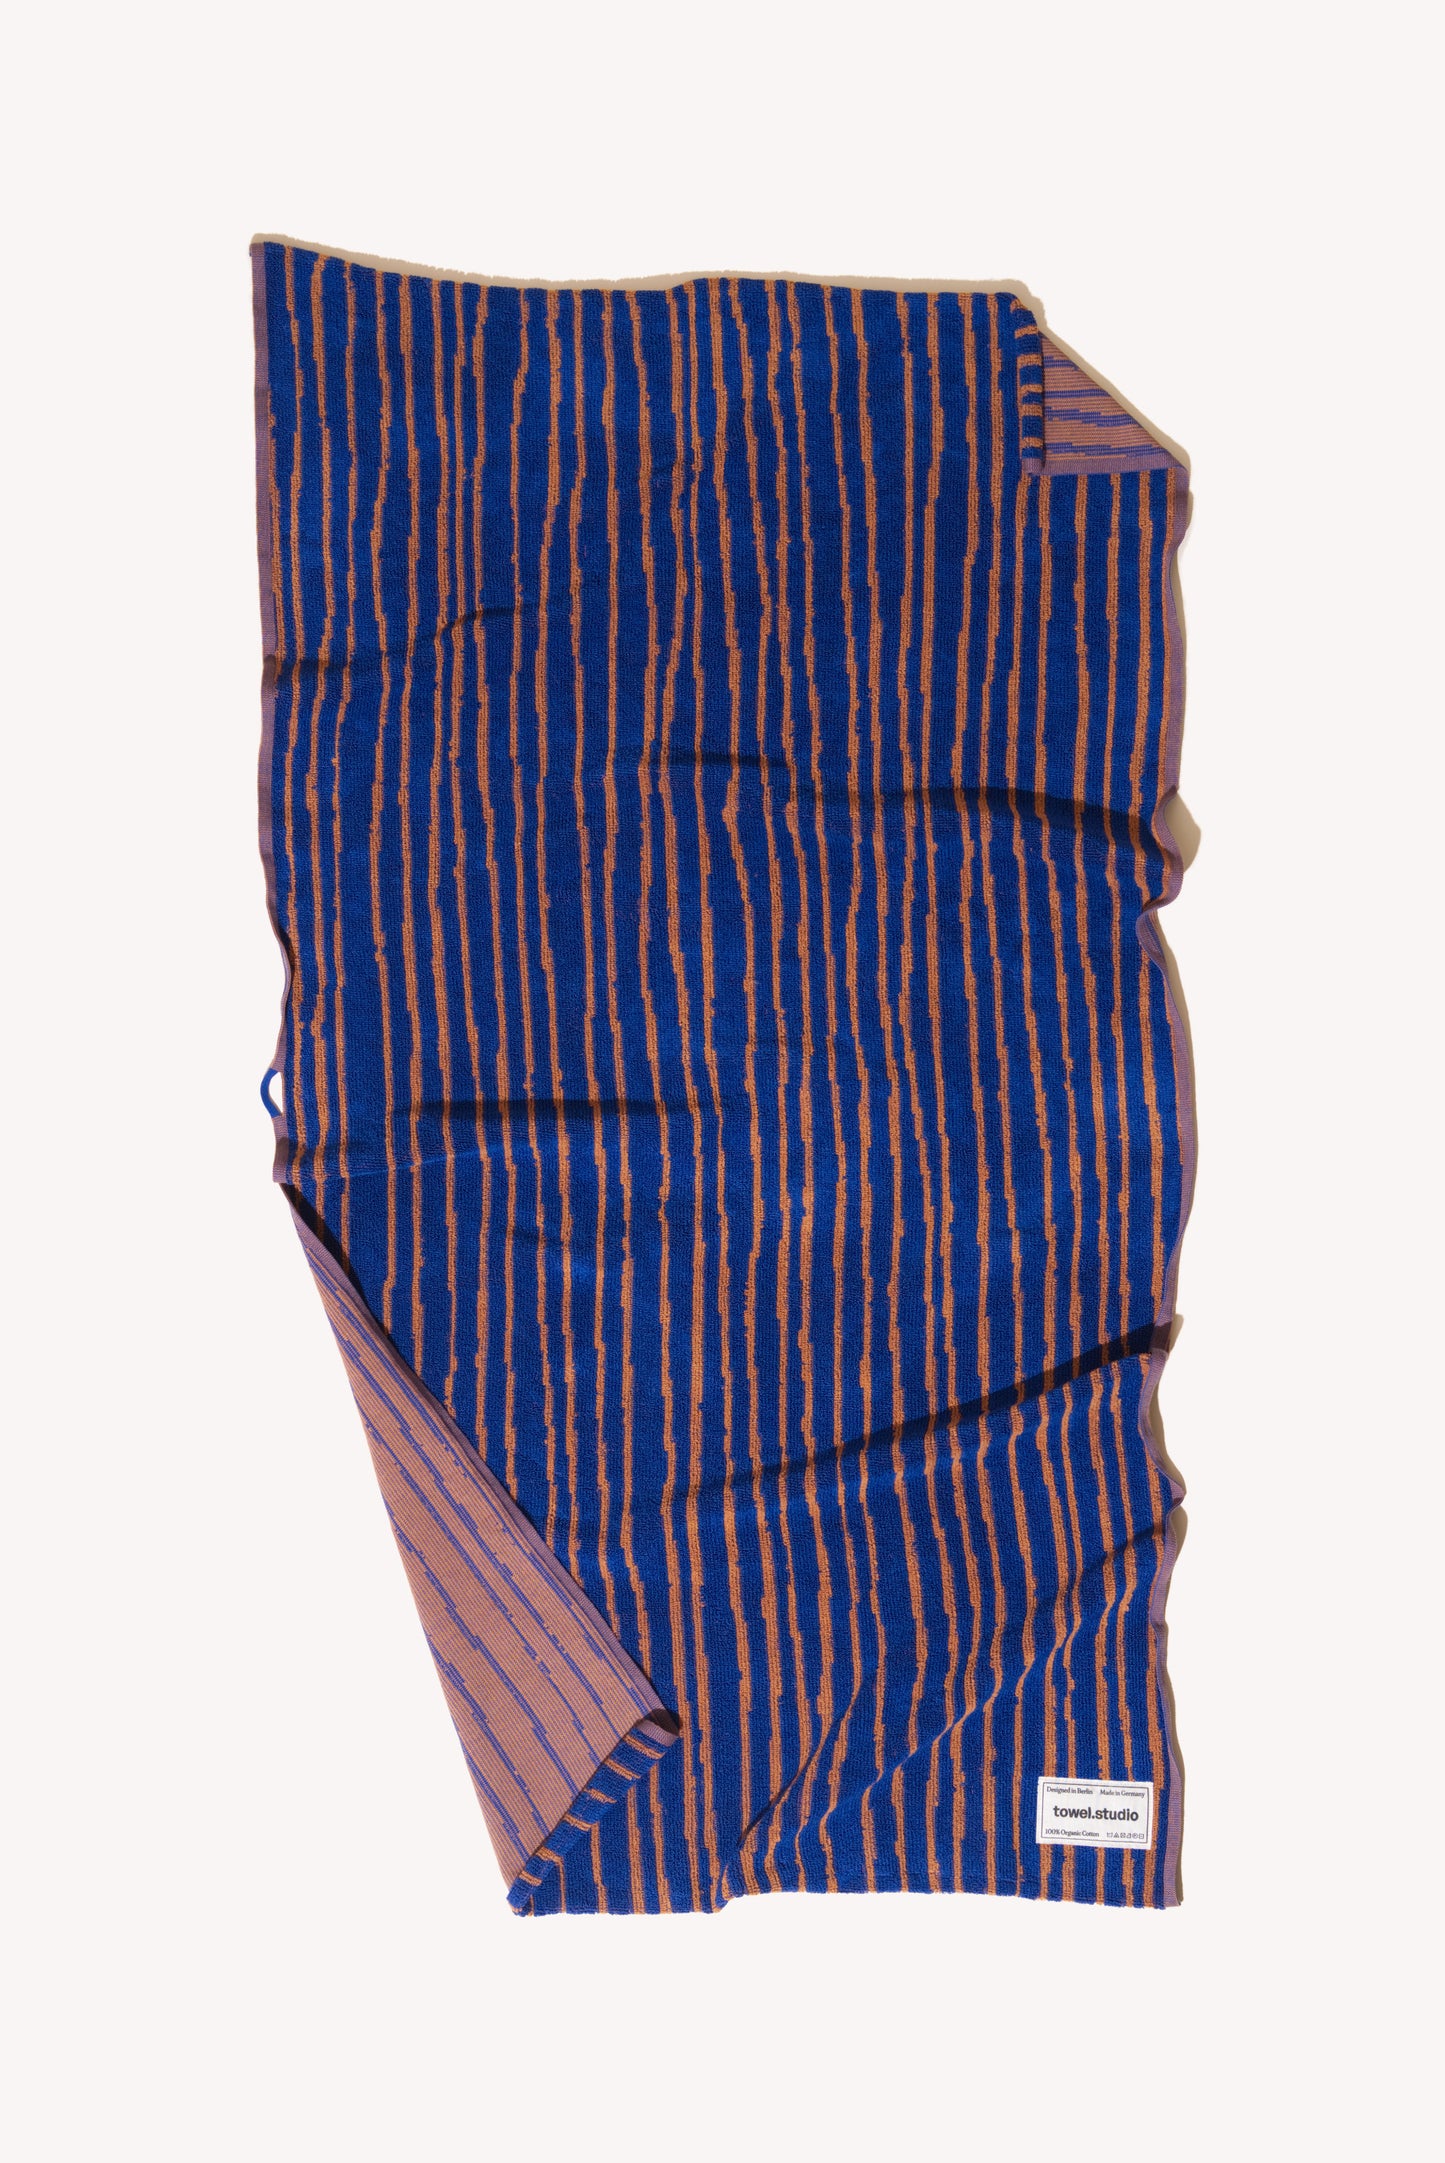 Stripe Bath Towel | Azure & Chestnut